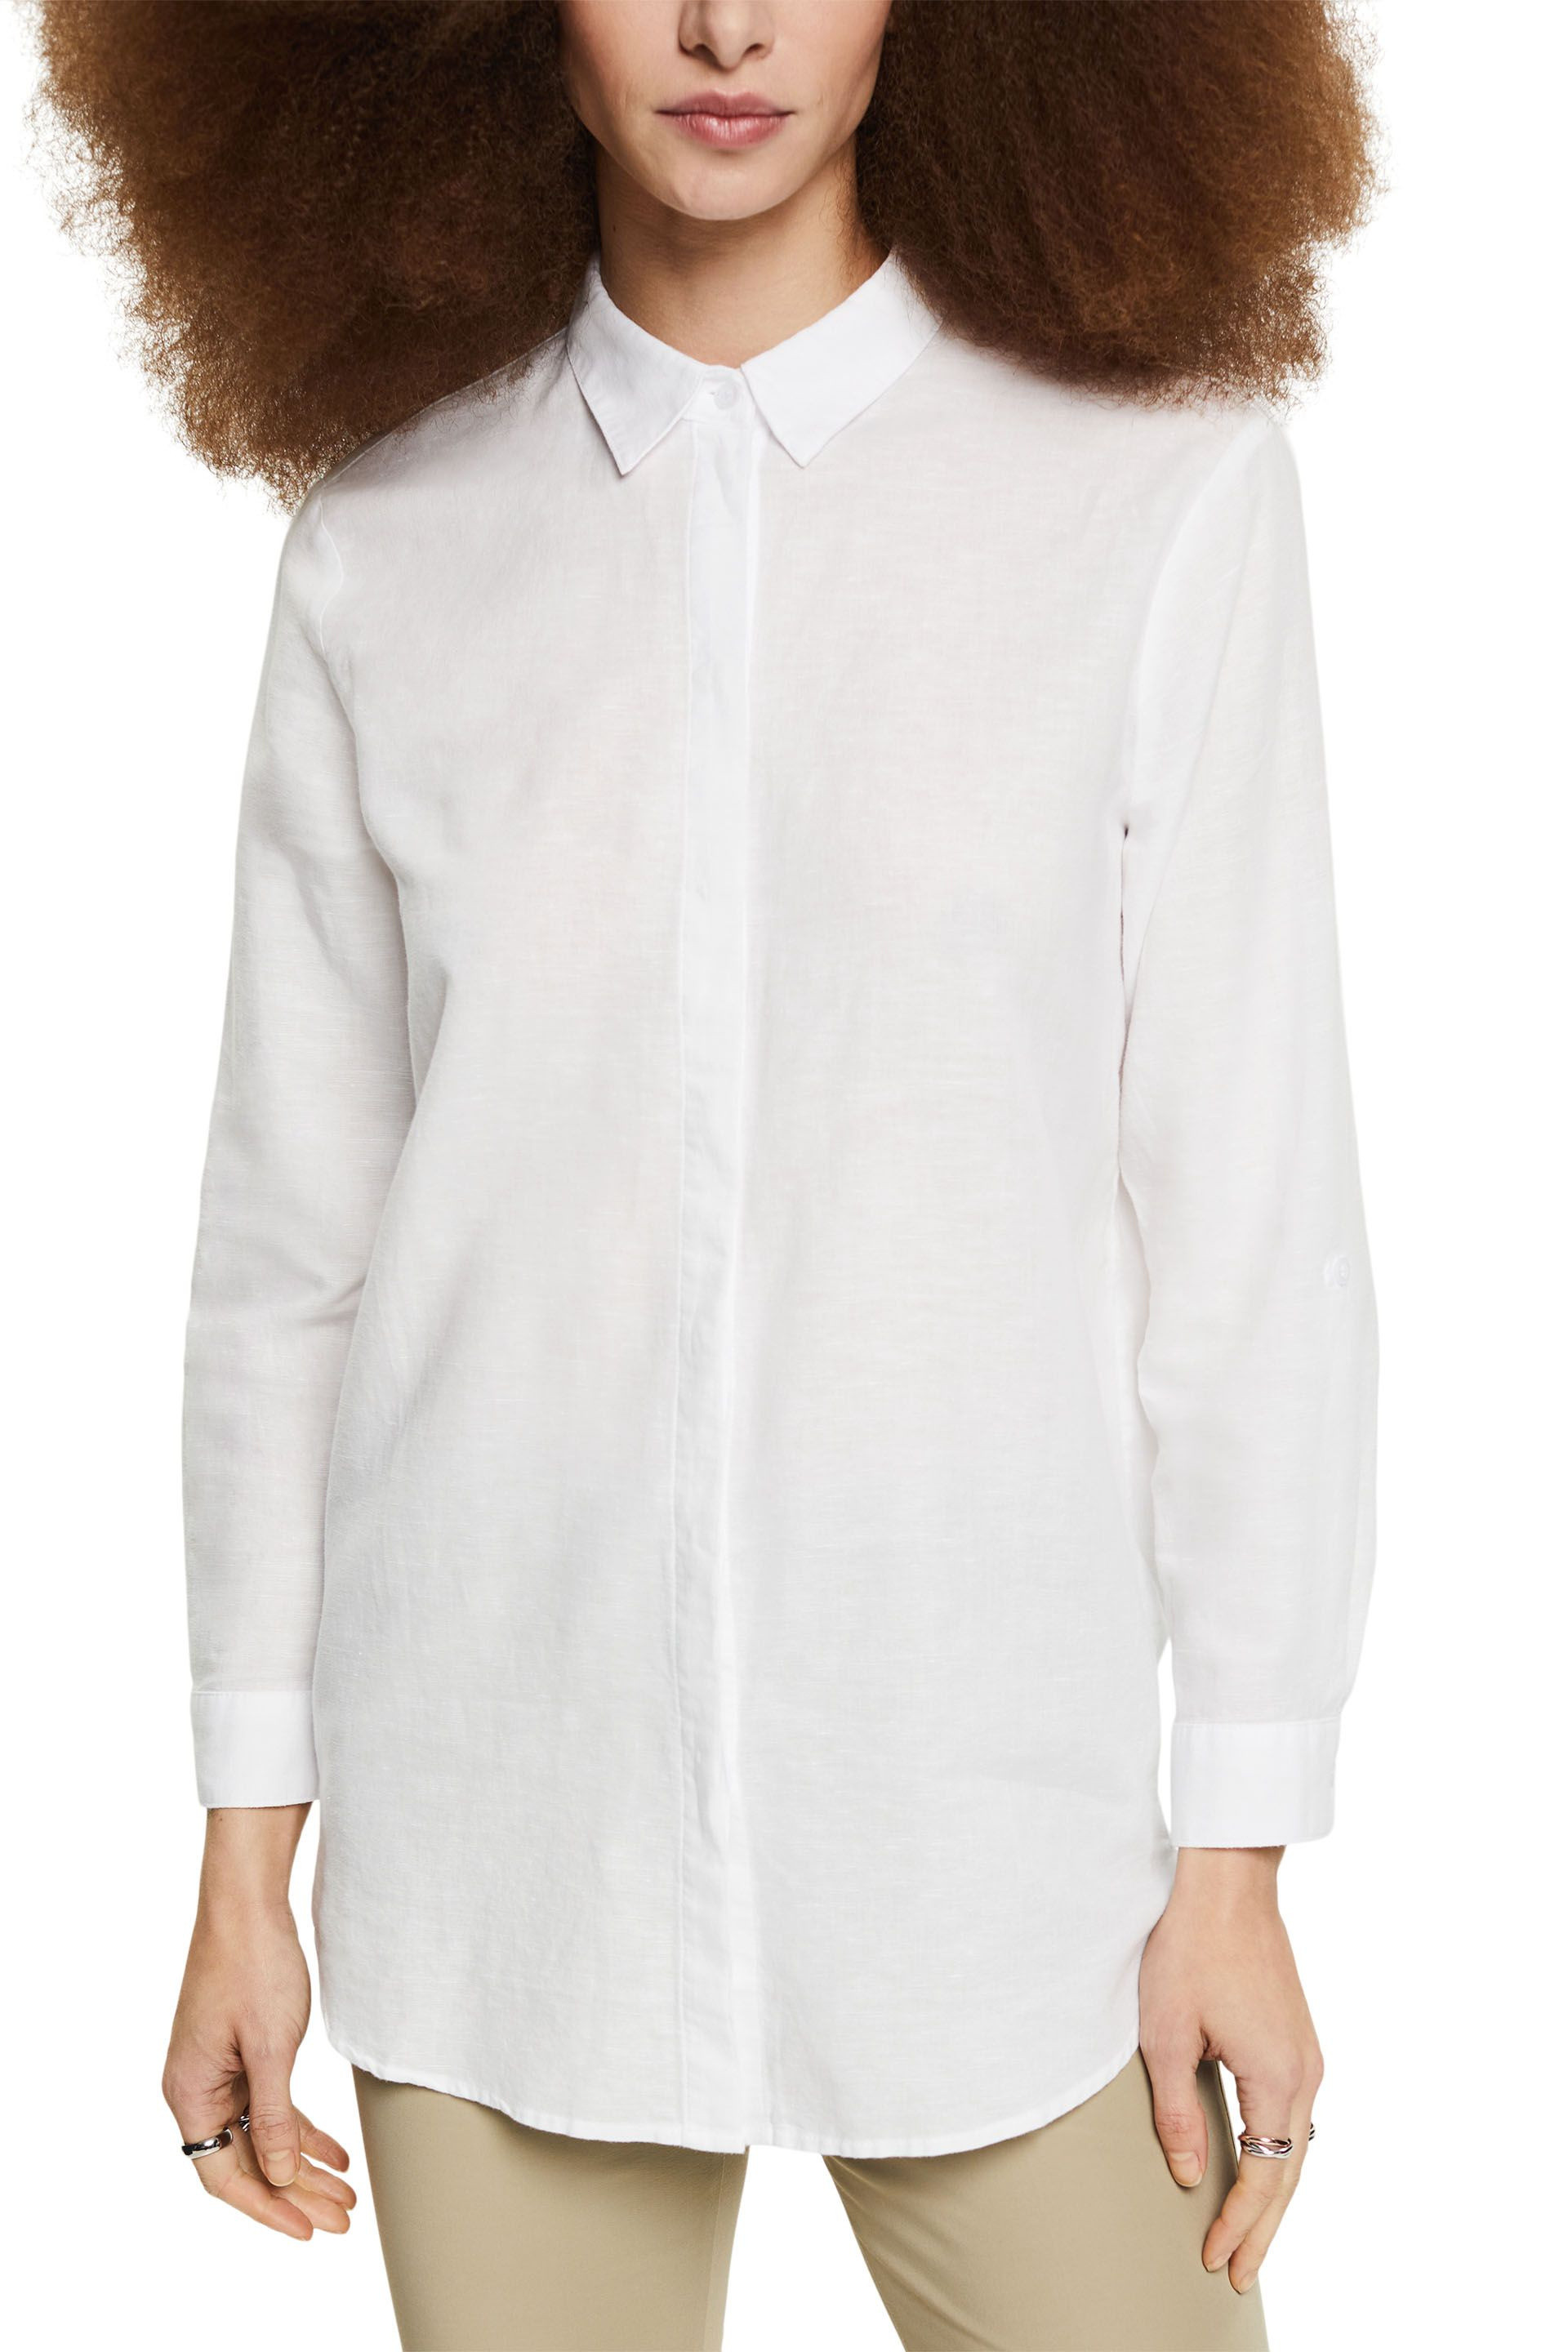 Linen blend shirt, White, large image number 1